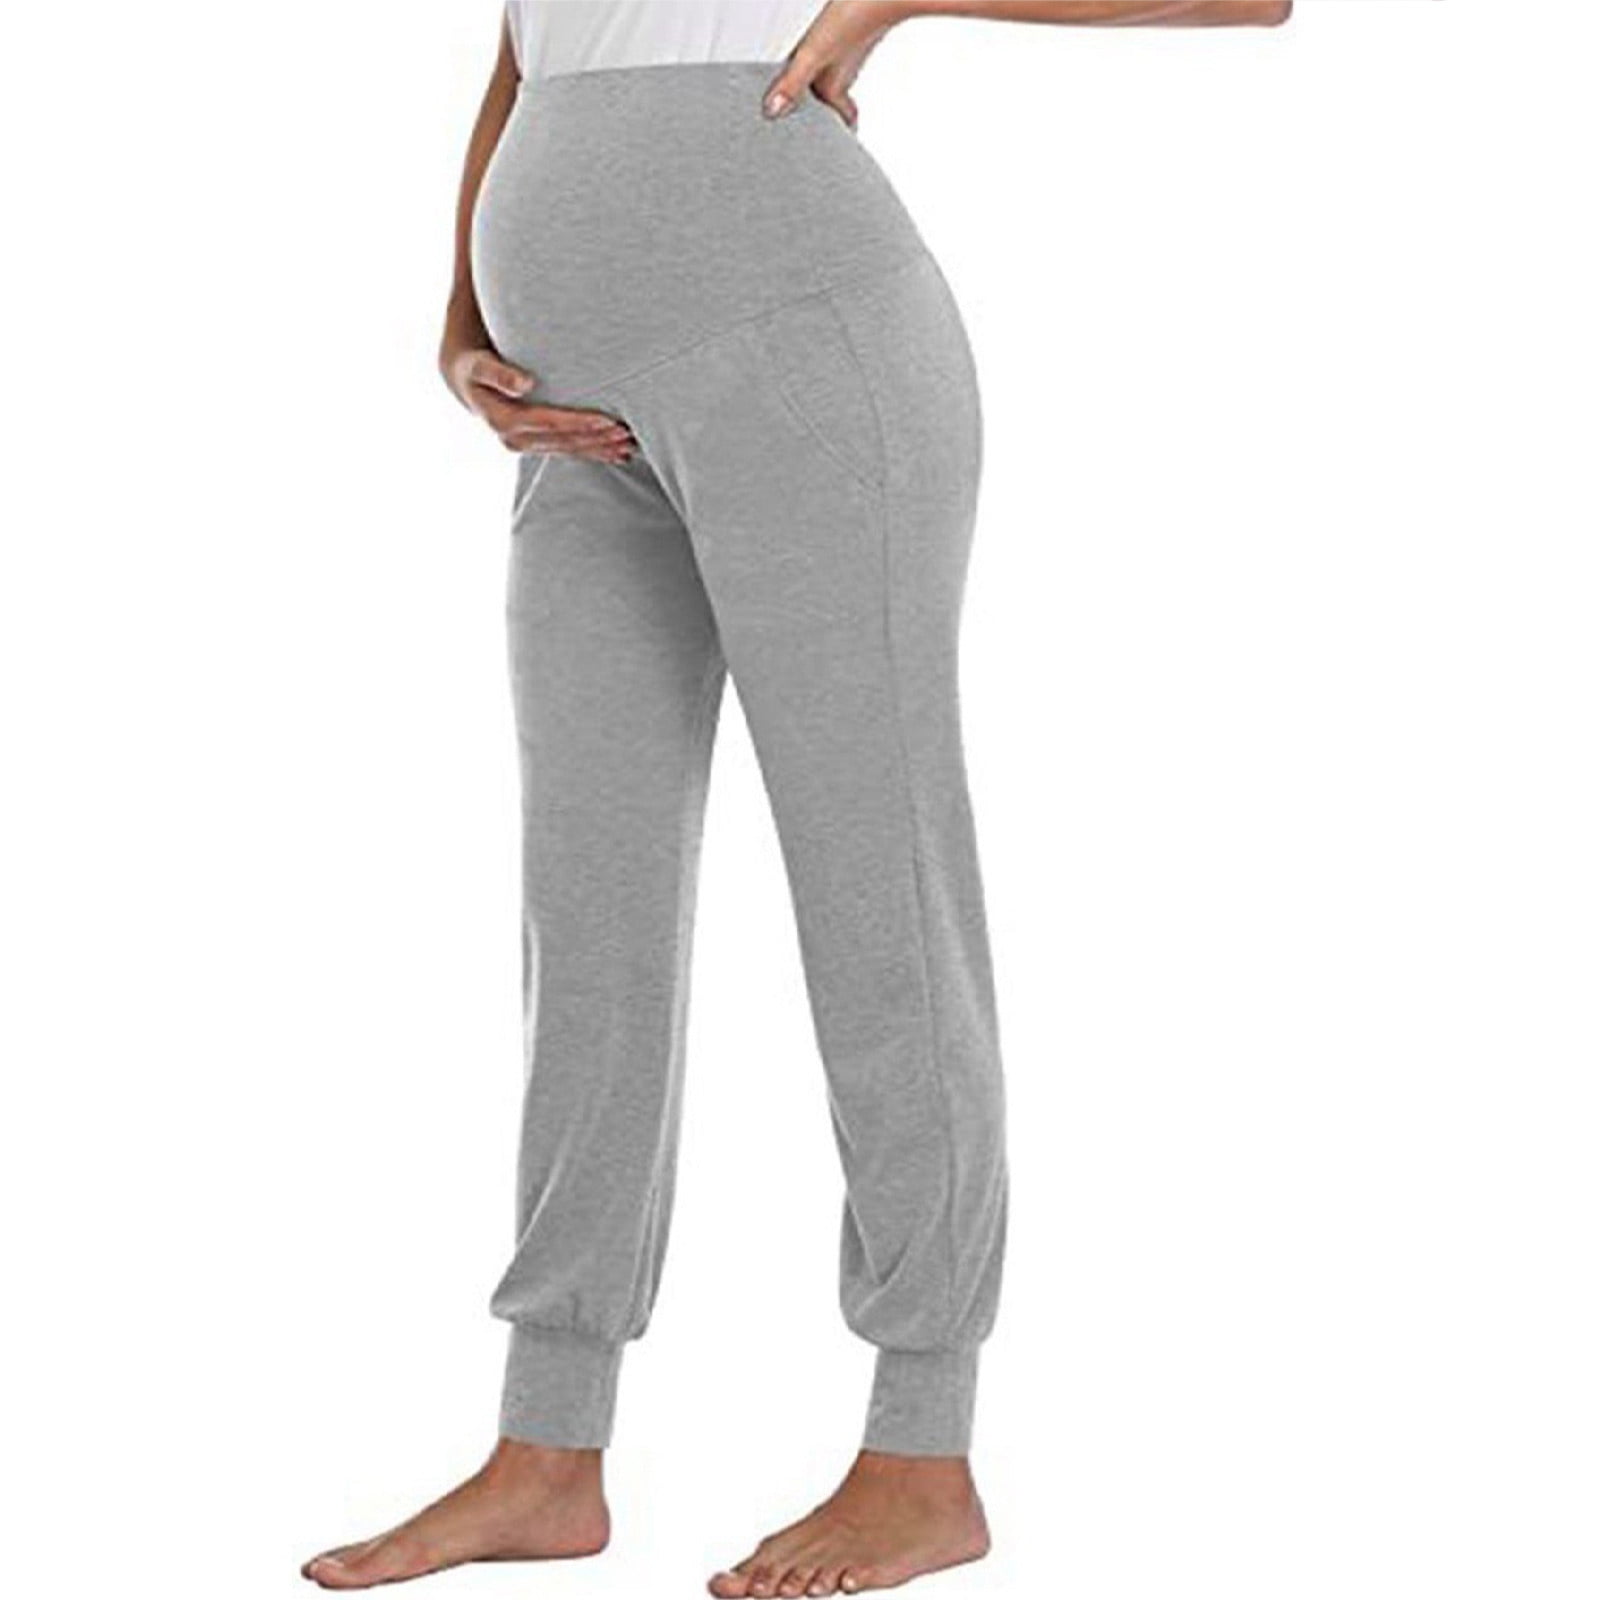 Kiplyki Wholesale Elastic Belly Protection Maternity Pregnant Leggings  Pants Trousers Pencil Pants